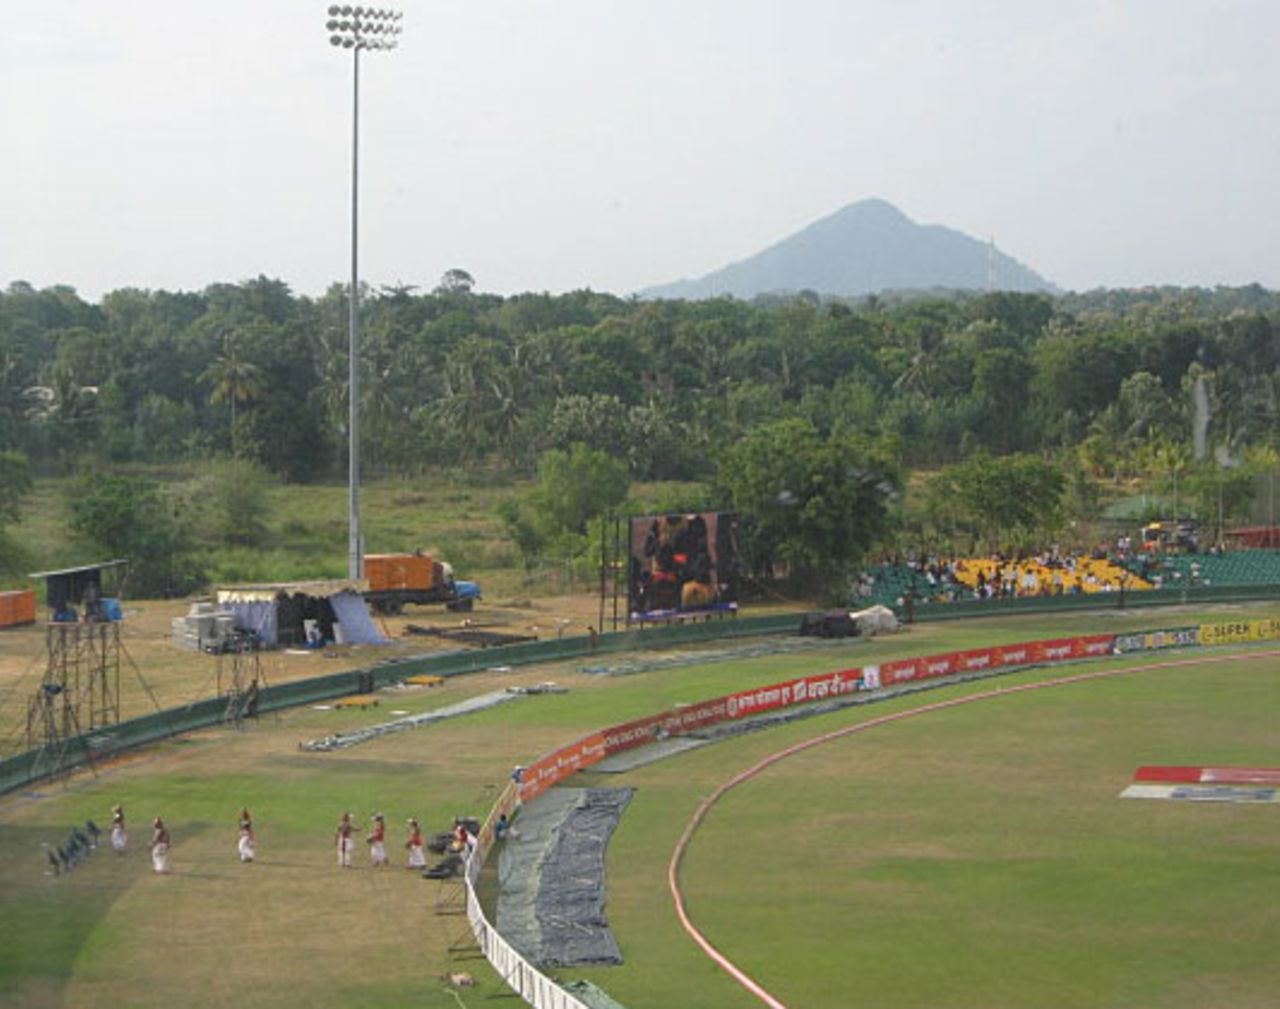 A view of the hills around the Dambulla ground, June 19, 2010